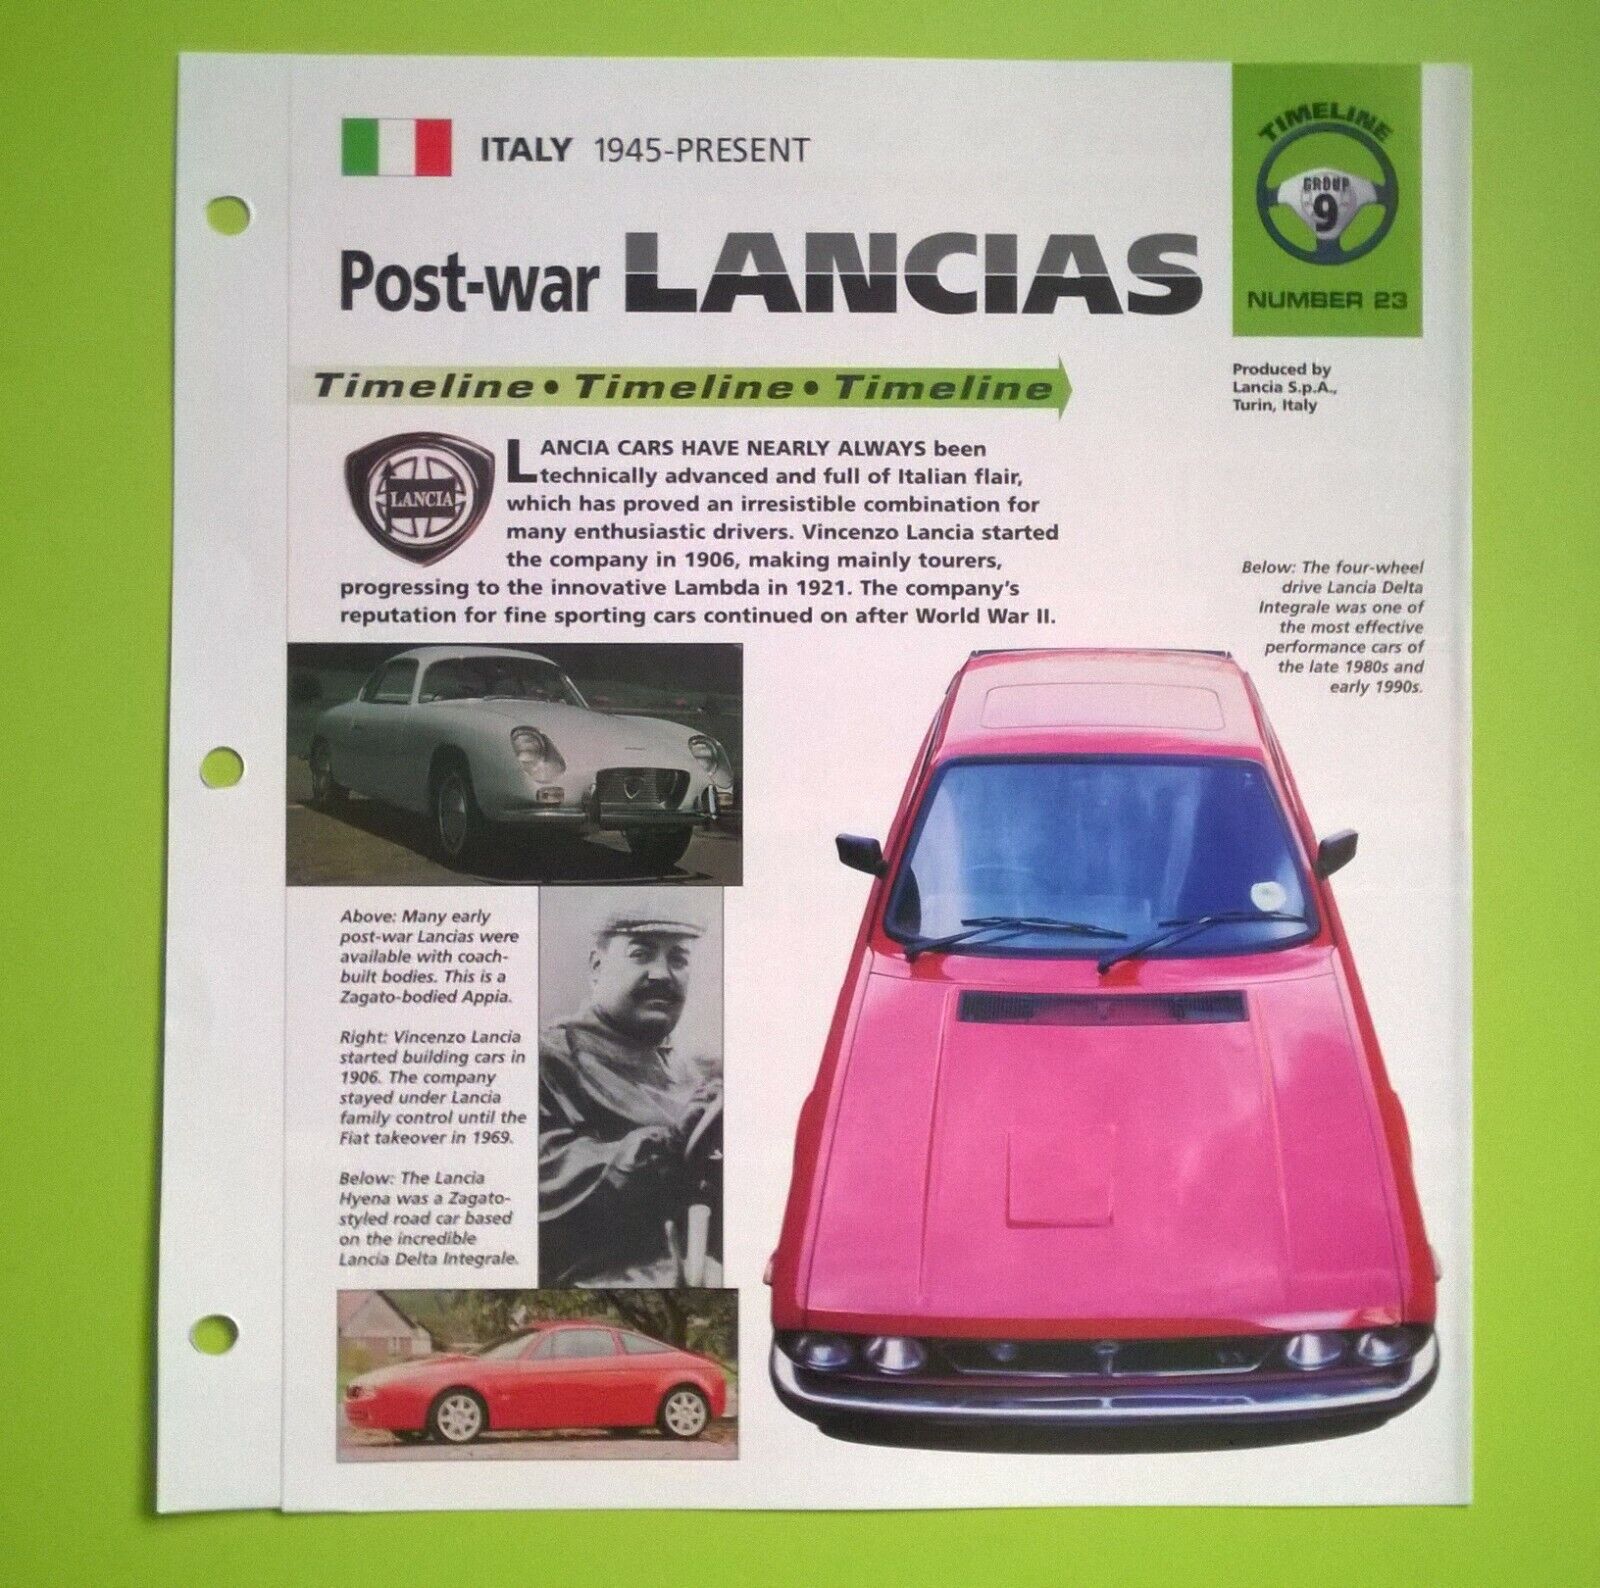 Imp Post war Lancia aprillia to Y timeline history information brochure hot car